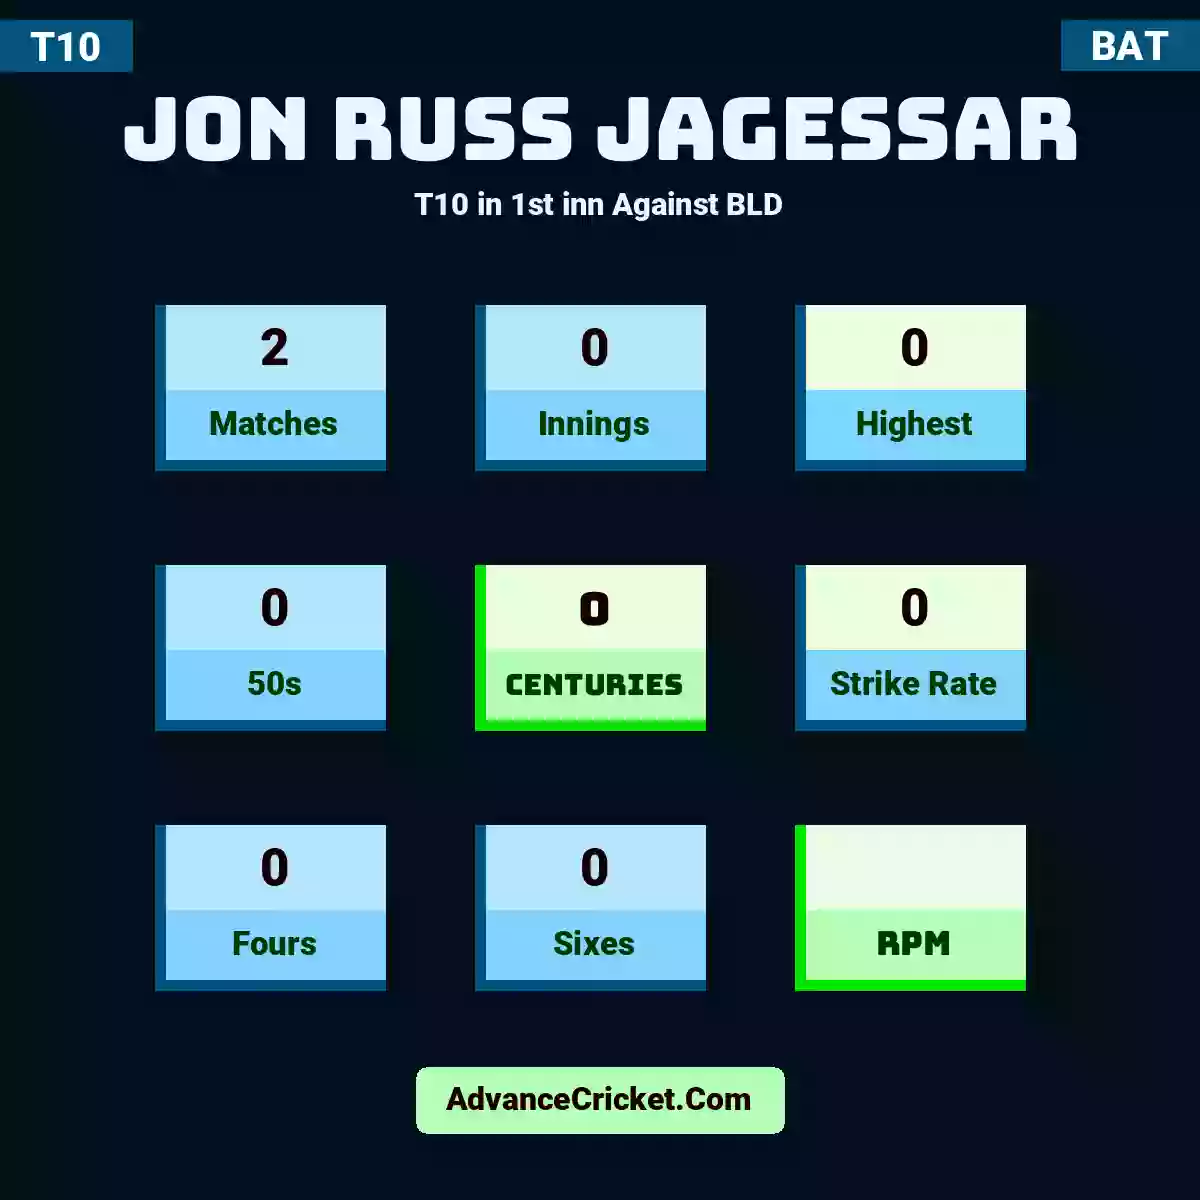 Jon Russ Jagessar T10  in 1st inn Against BLD, Jon Russ Jagessar played 2 matches, scored 0 runs as highest, 0 half-centuries, and 0 centuries, with a strike rate of 0. J.Russ.Jagessar hit 0 fours and 0 sixes.